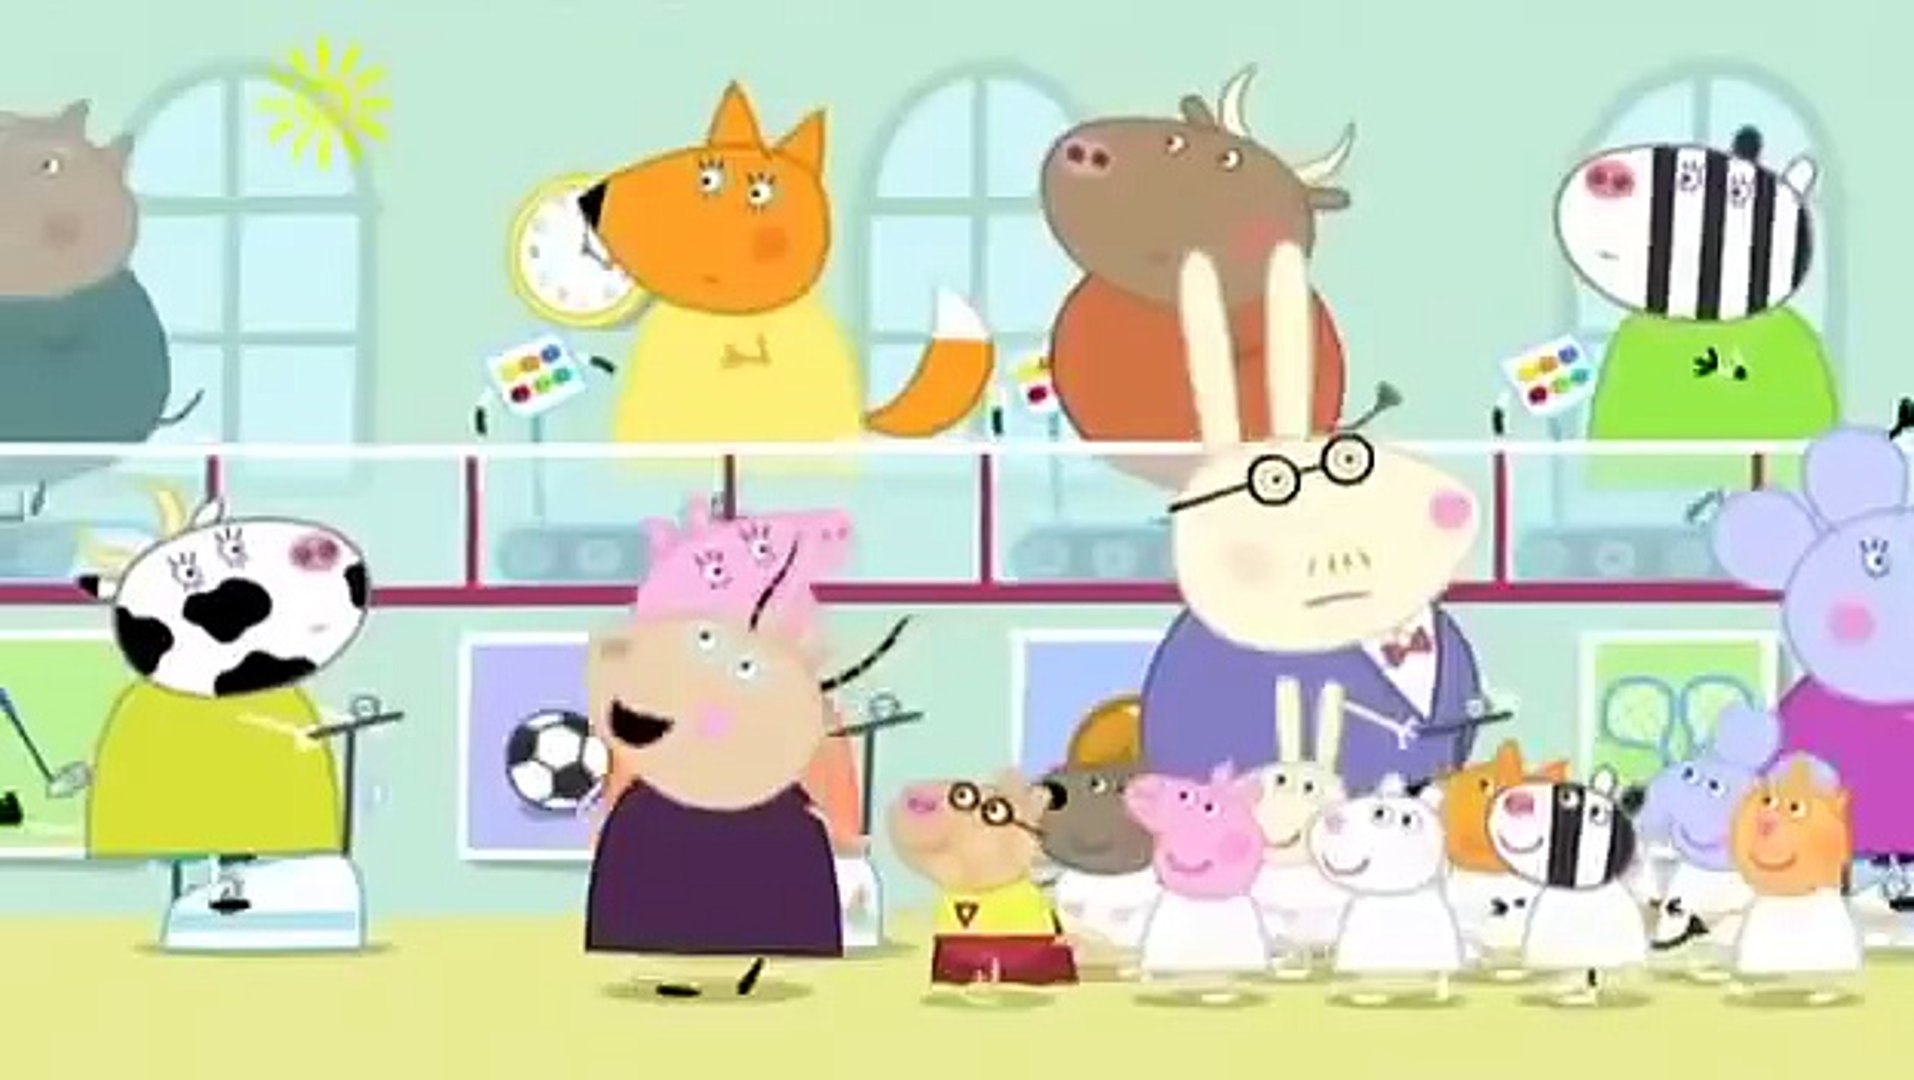 Peppa Pig Full Episodes, Season 8, Compilation 45